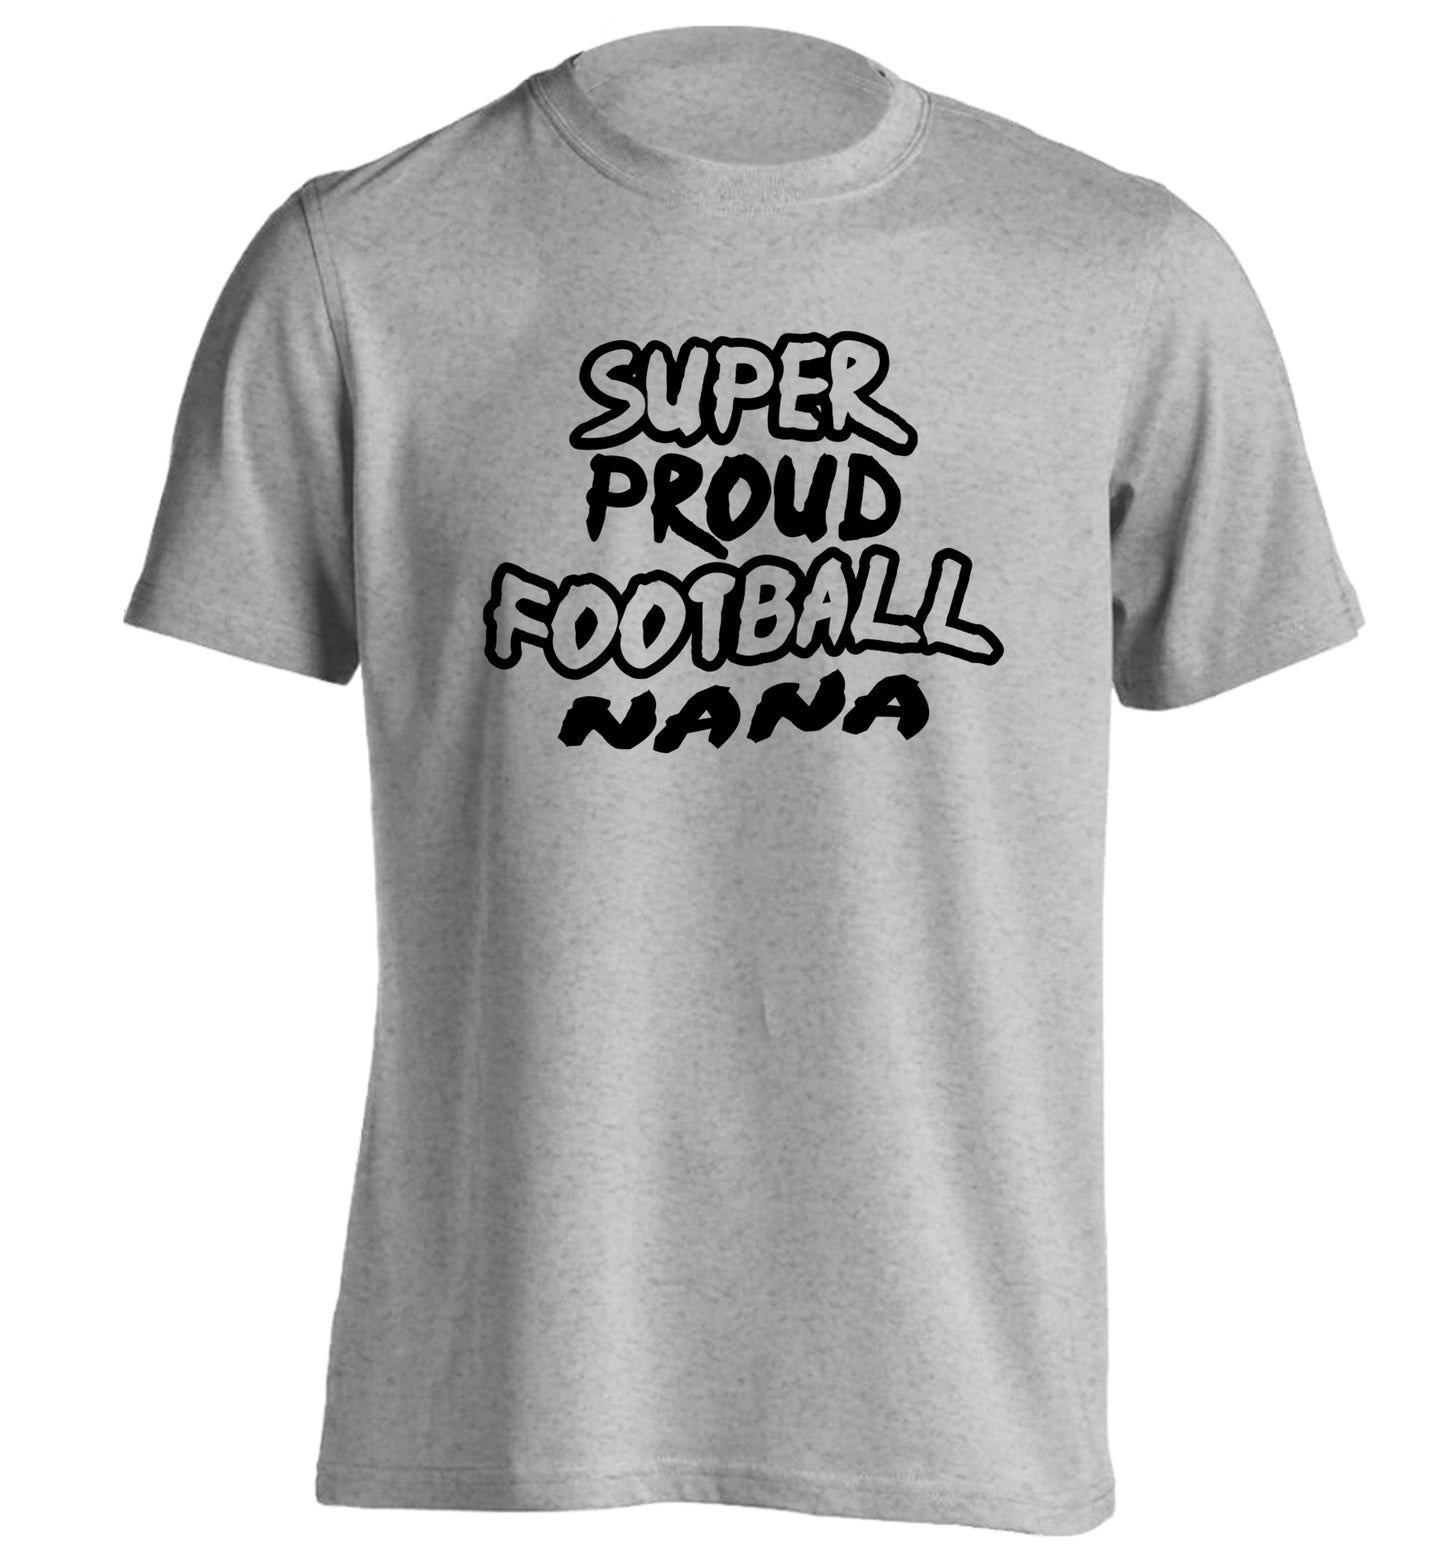 Super proud football nana adults unisexgrey Tshirt 2XL